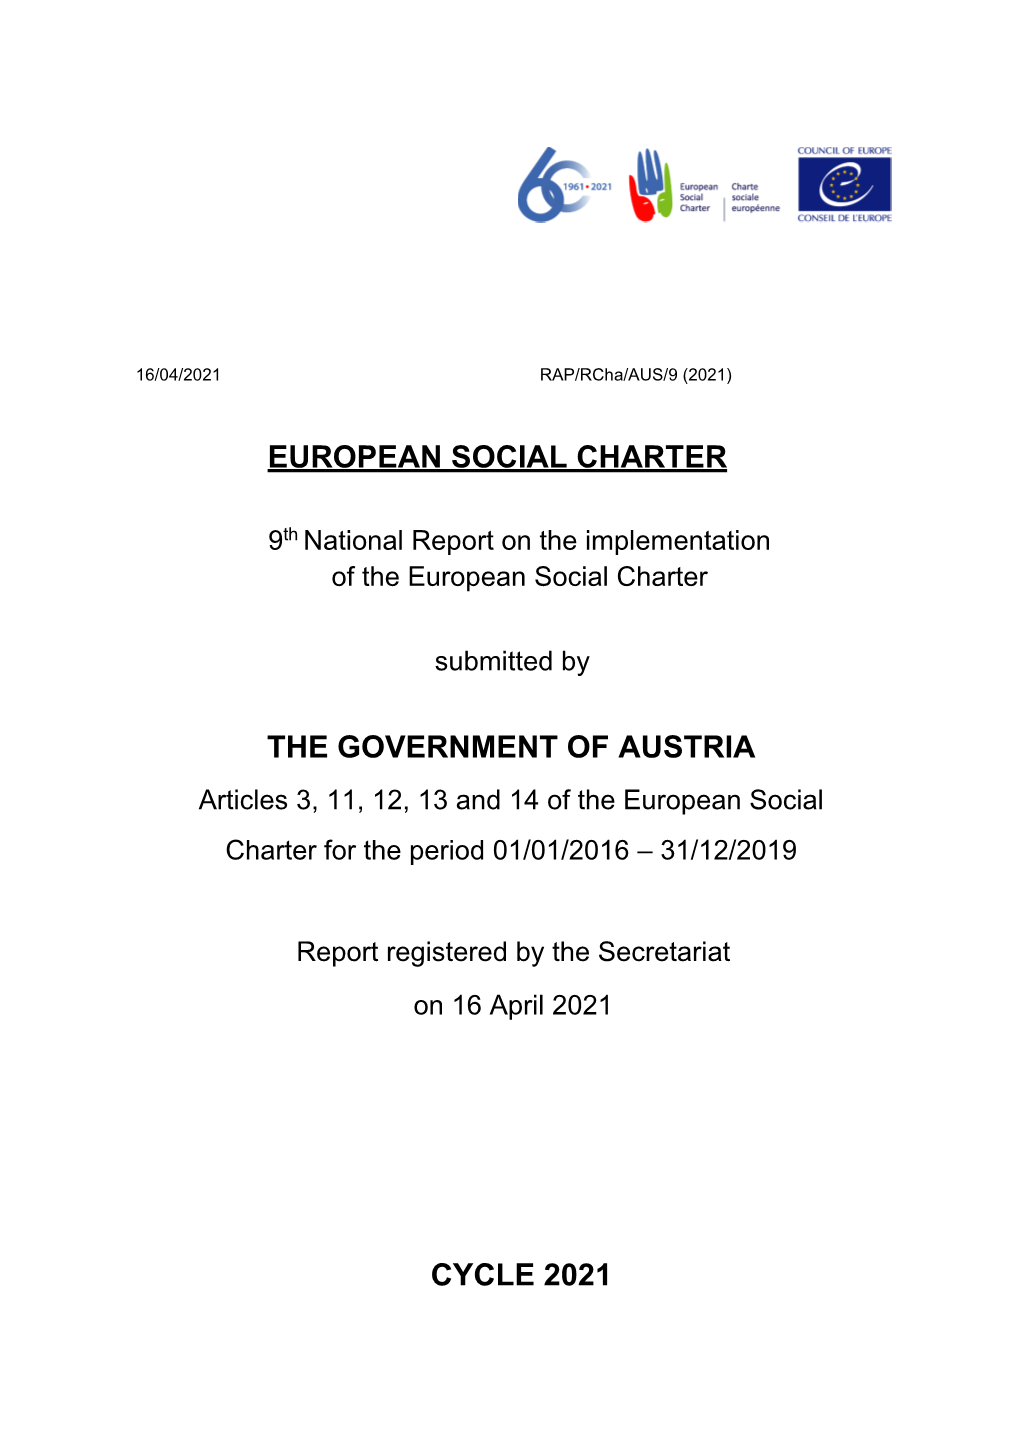 European Social Charter the Government of Austria